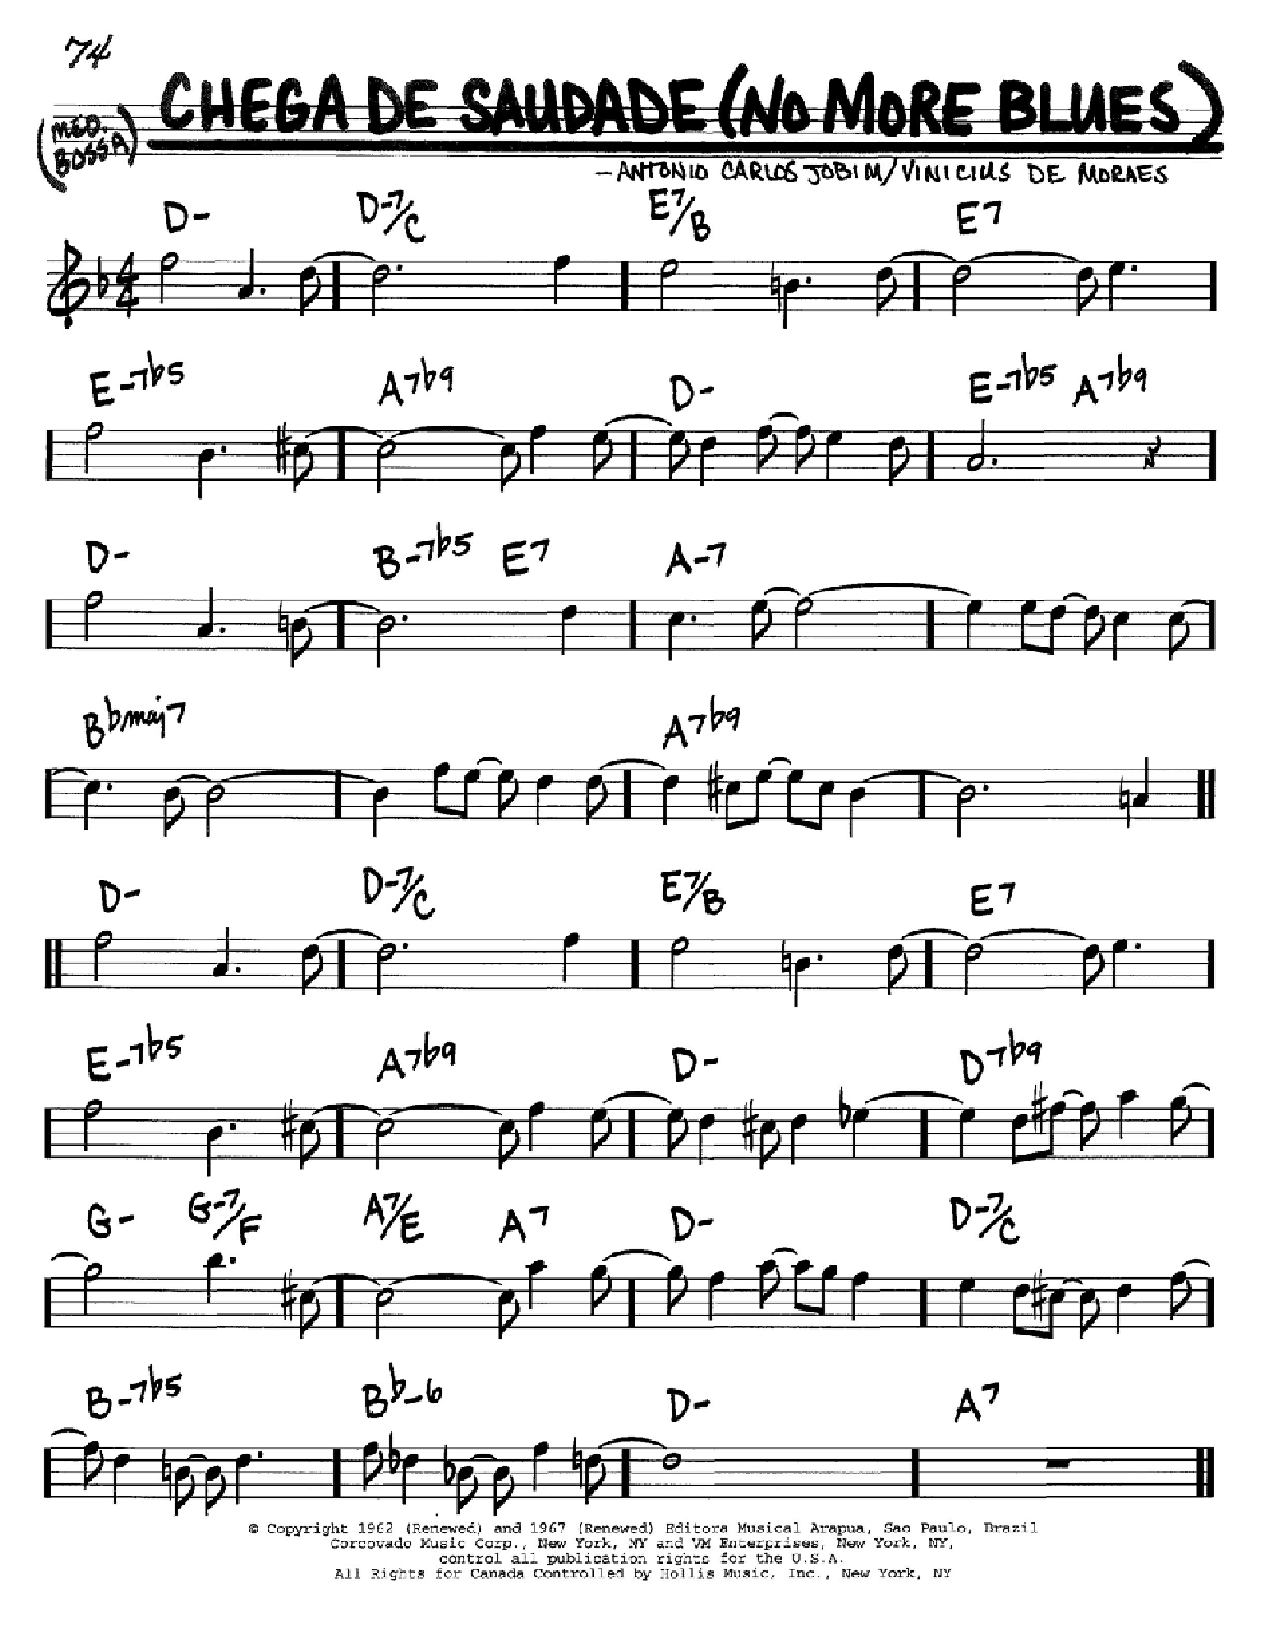 Antonio Carlos Jobim Chega De Saudade (No More Blues) Sheet Music Notes & Chords for Real Book - Melody & Chords - Bass Clef Instruments - Download or Print PDF